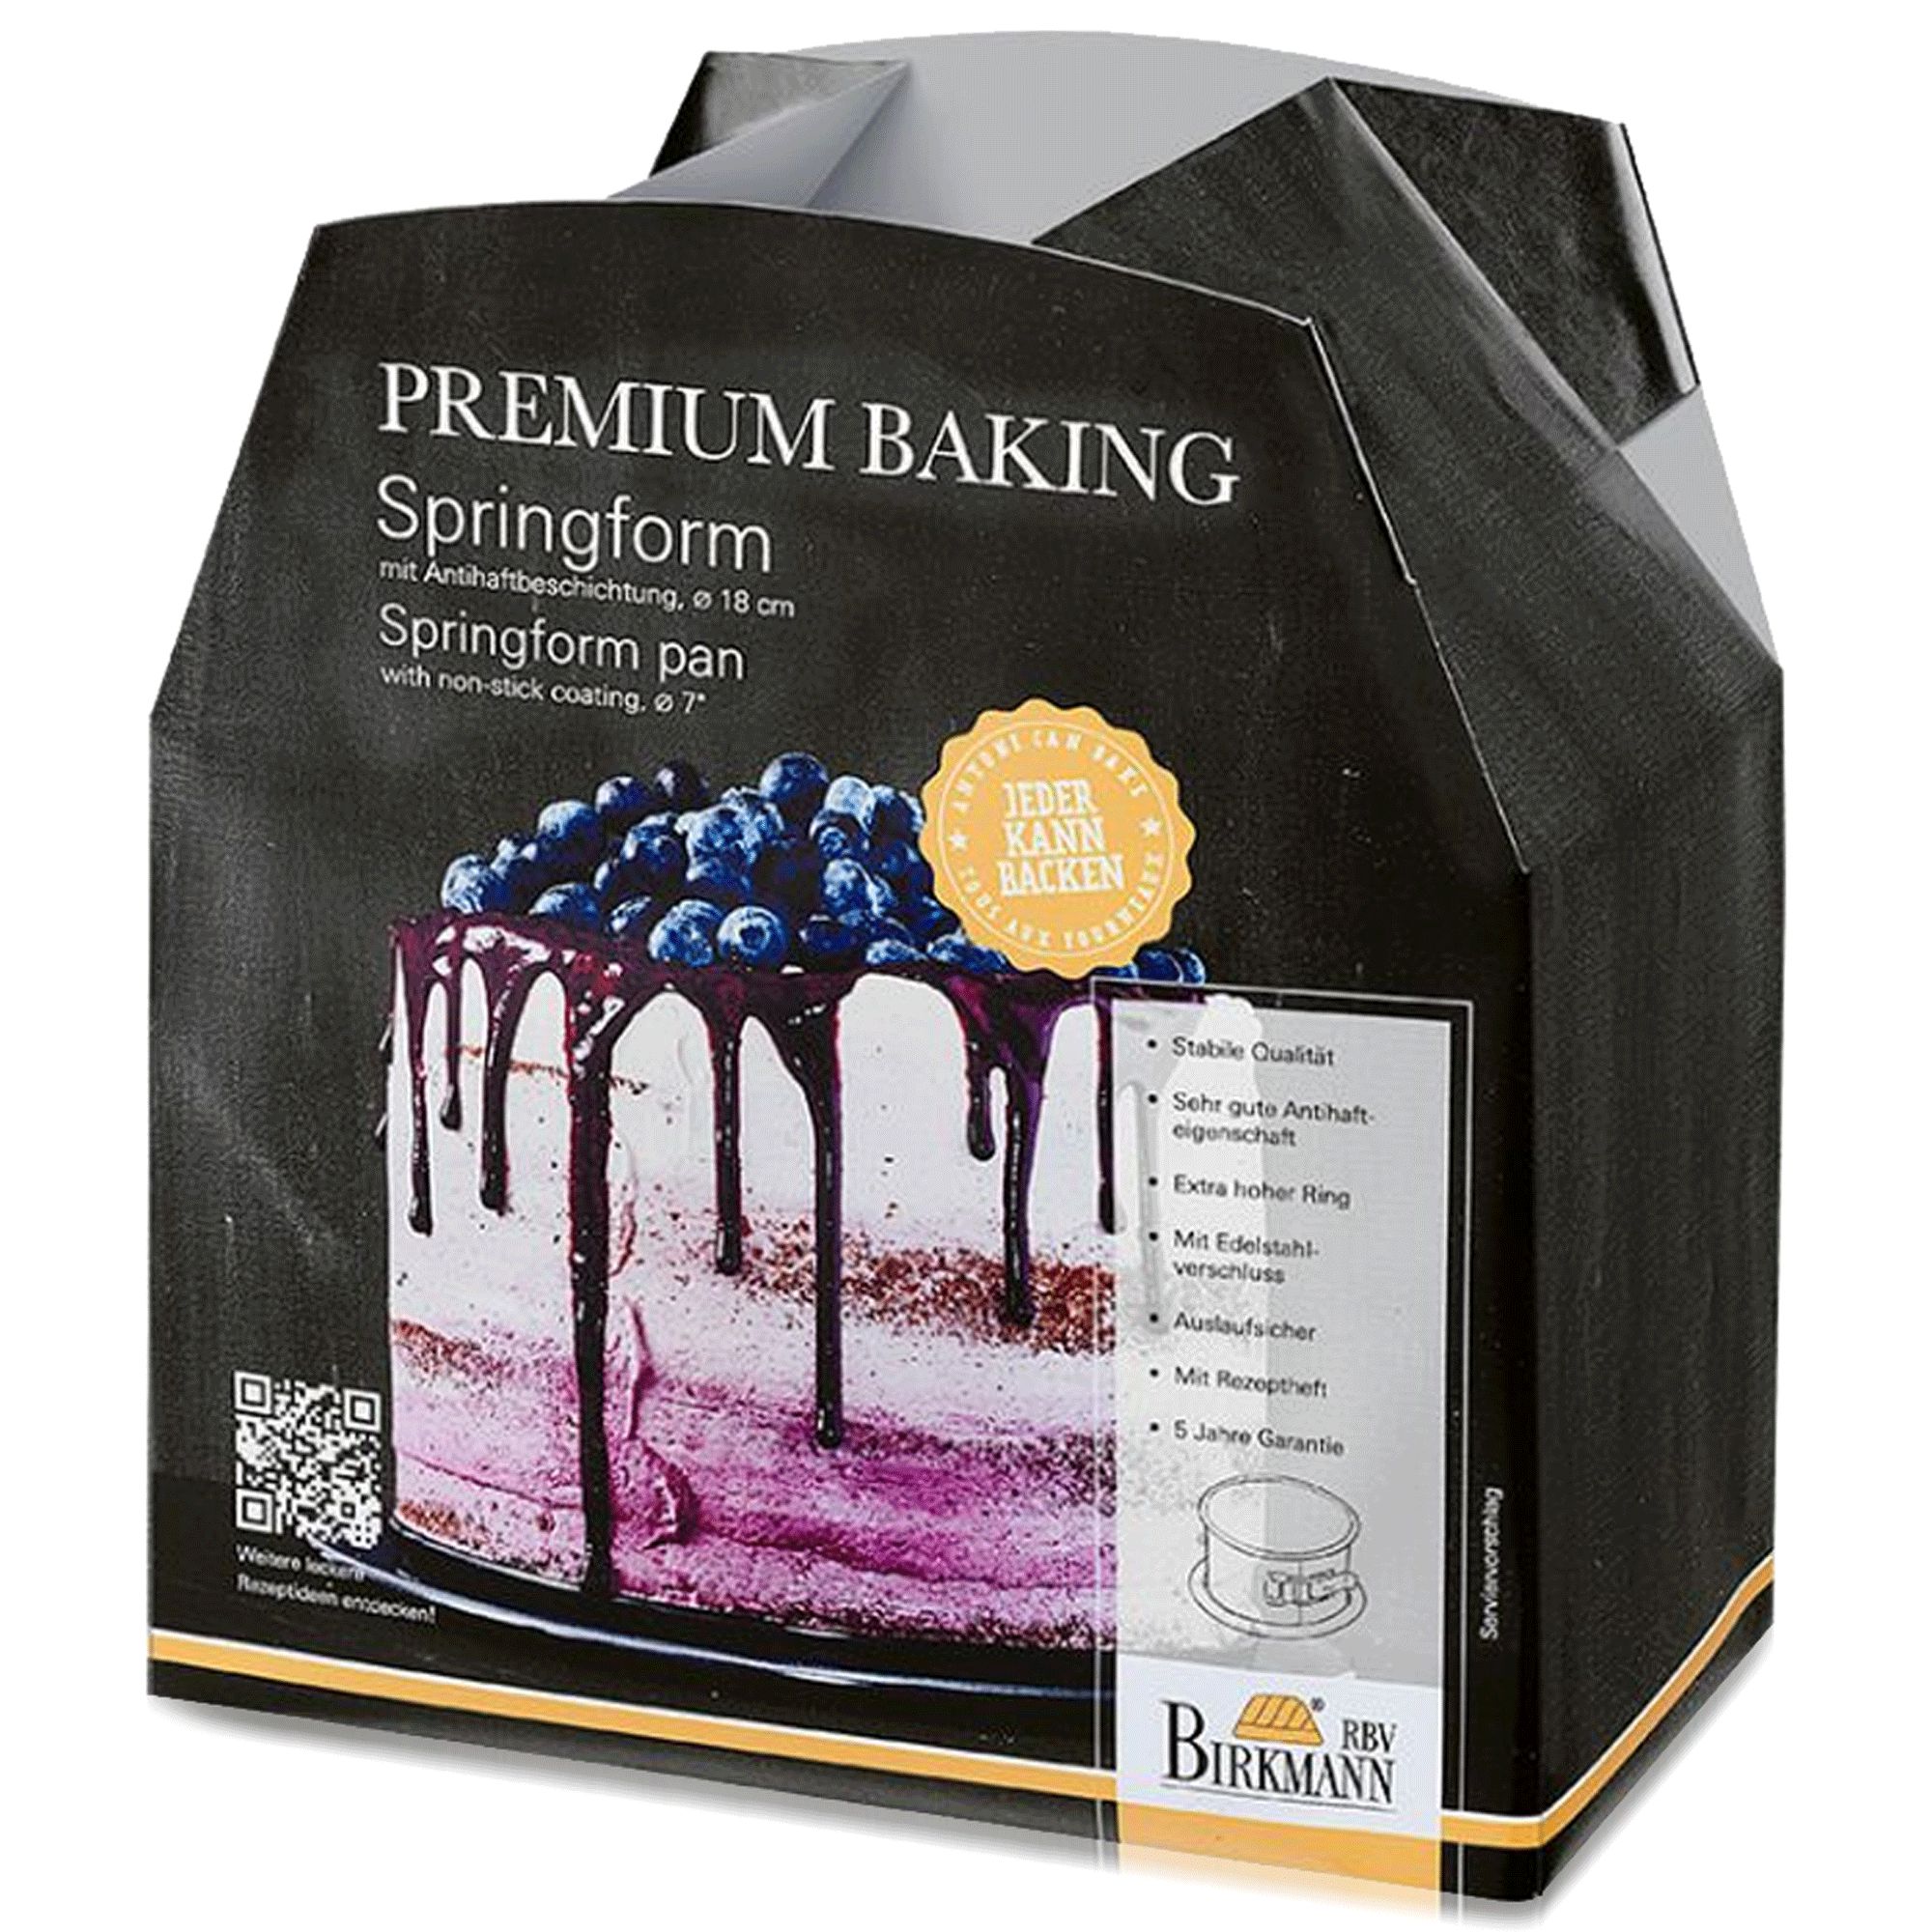 Birkmann - cake tin, 18 cm, with 12 cm high rim - Premium Baking